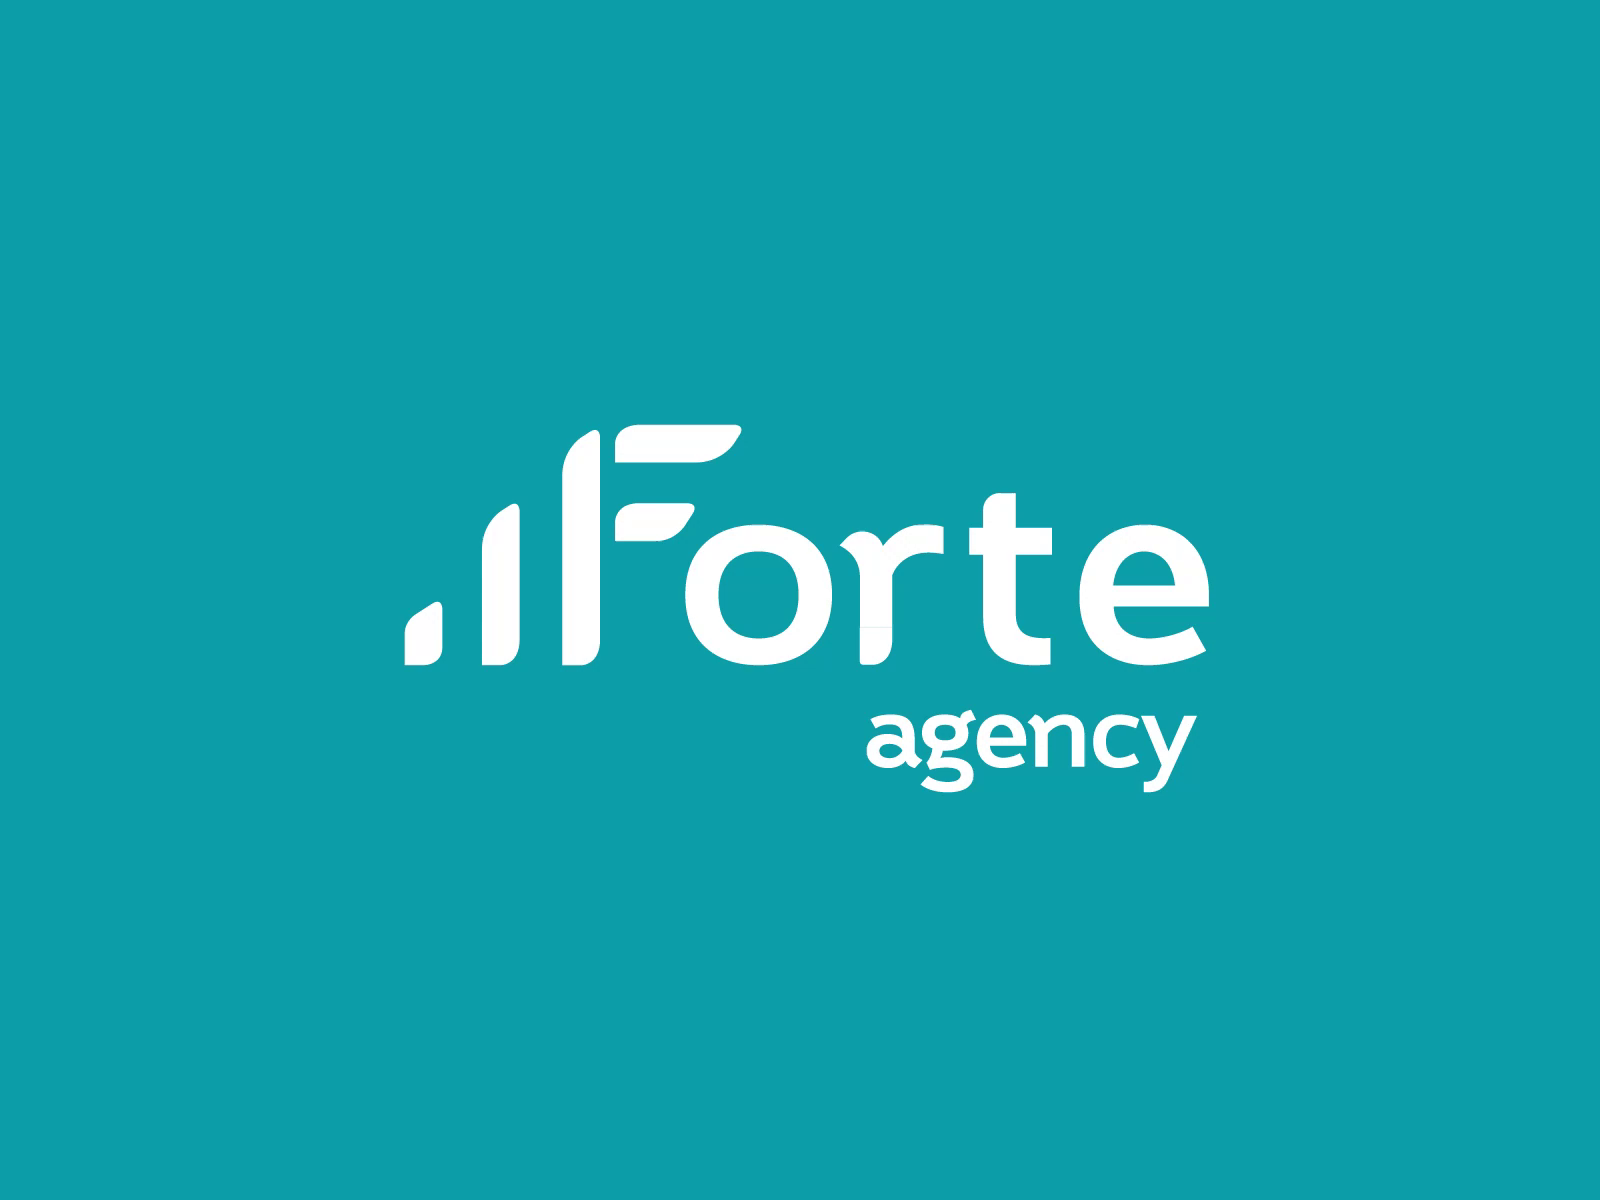 Forte logo animation by Nguyen Nguyen on Dribbble